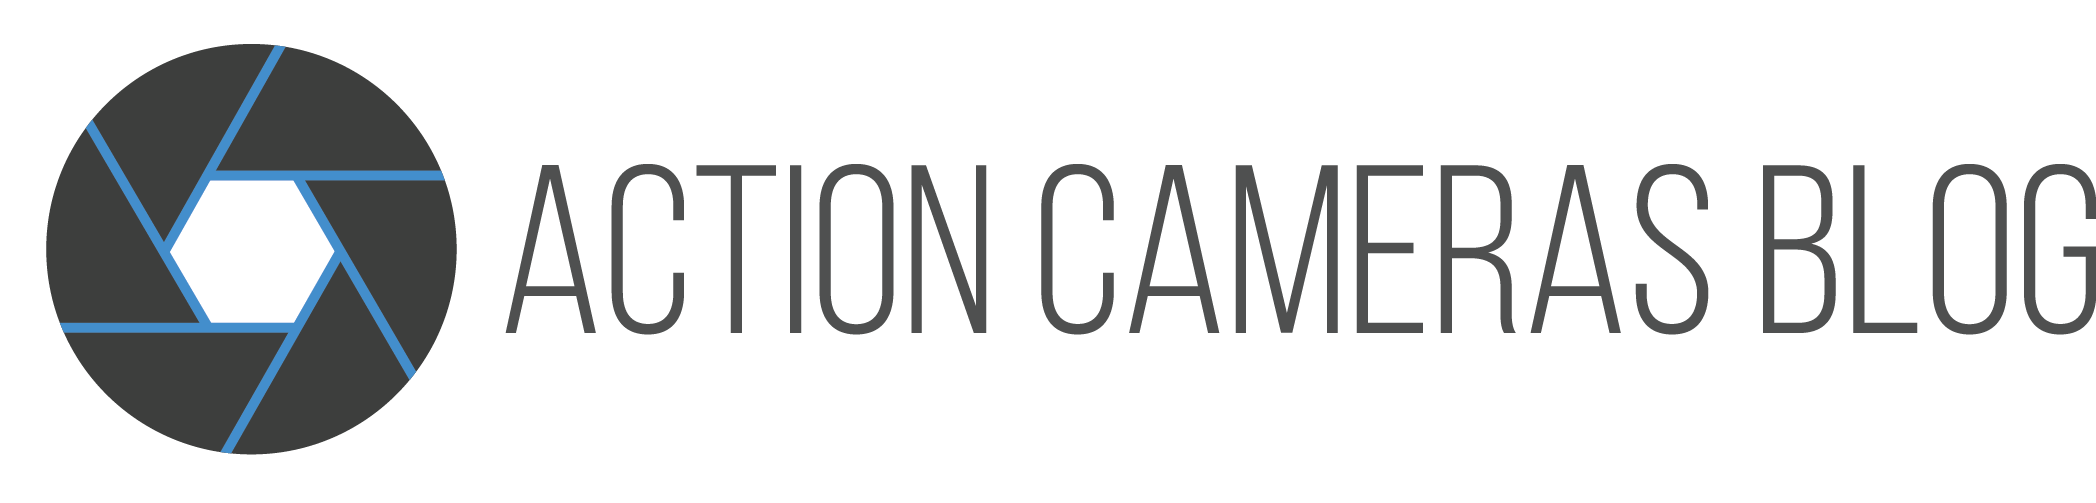 Action Cameras Blog